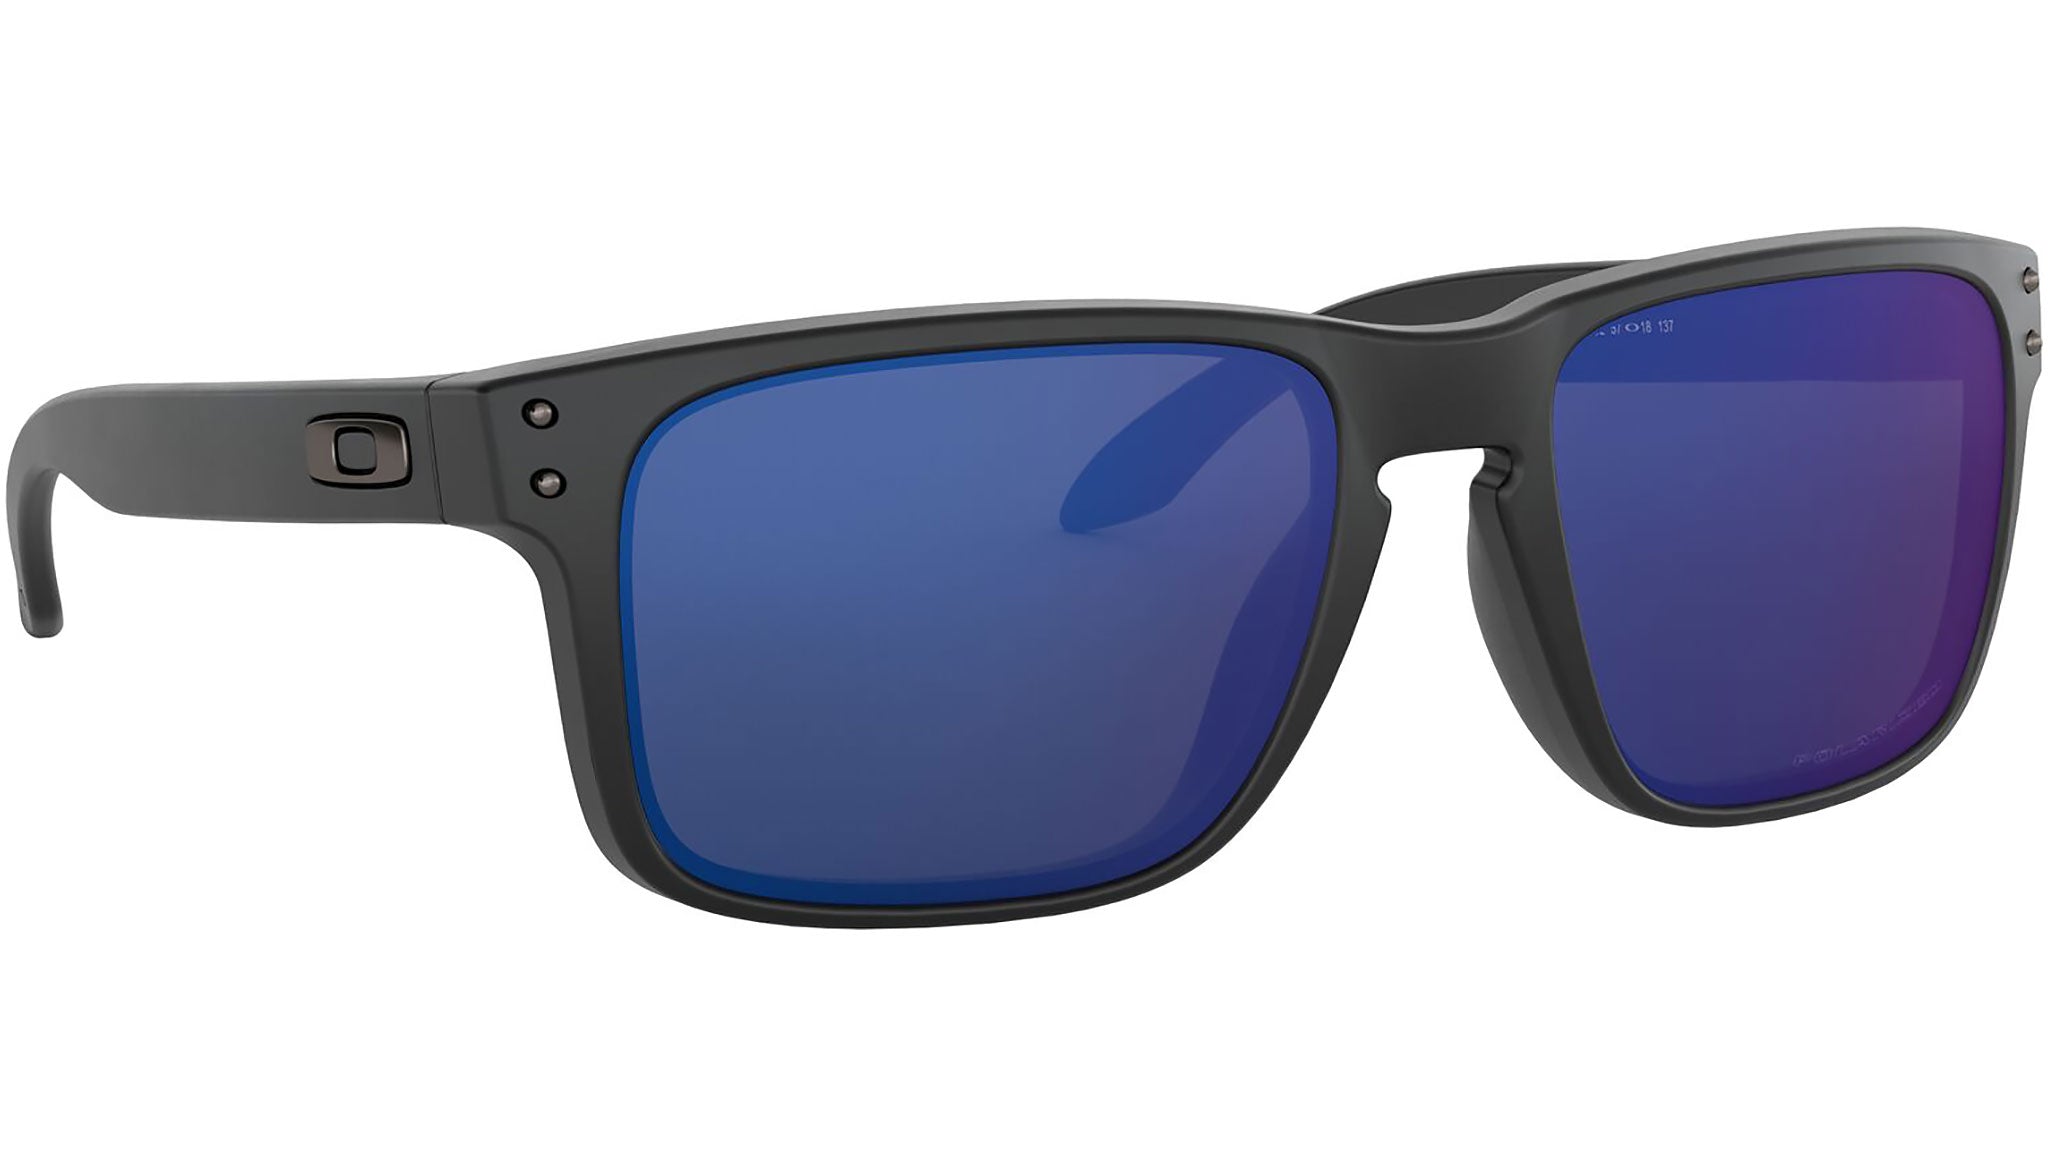 Oakley OO9102 Holbrook™ Sunglasses